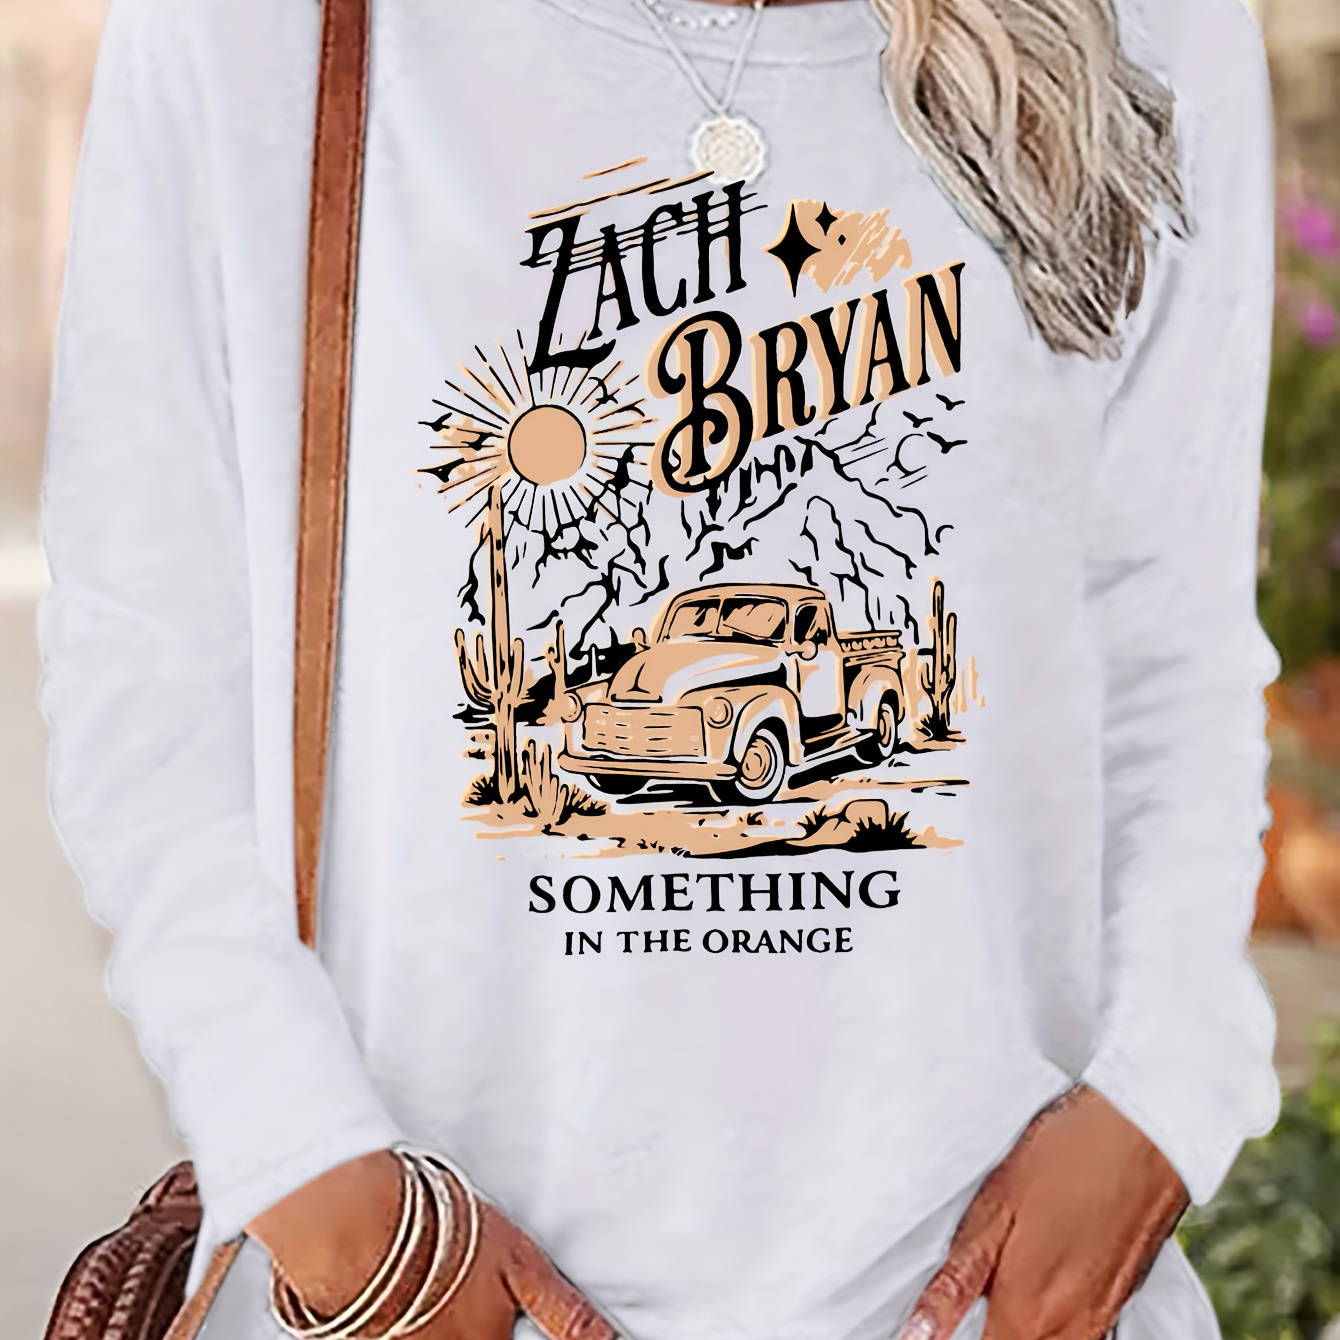 

Zach Bryan Print T-shirt, Casual Crew Neck Long Sleeve Top, Women's Clothing